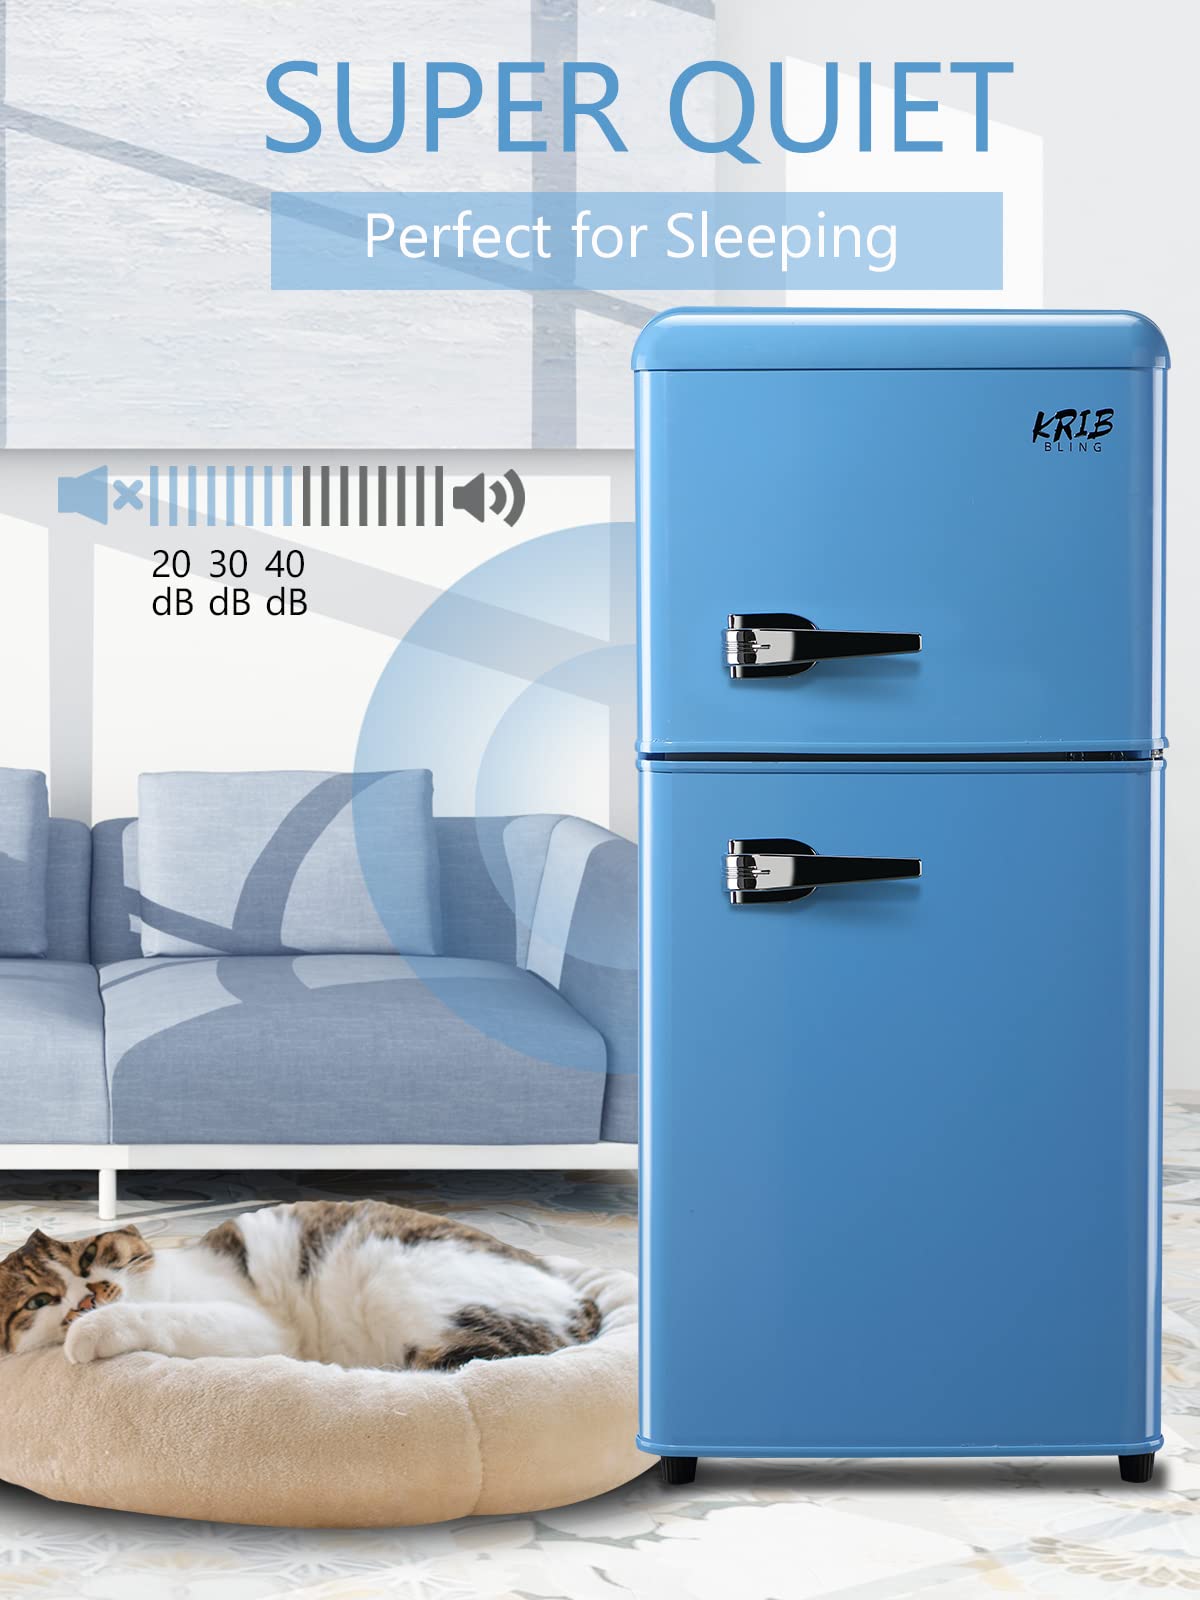  Galanz Retro Compact Mini Fridge with Freezer, 2-Door, Energy  Efficient, Small Refrigerator for Dorm, Office, Bedroom, 3.1 cu ft, Black :  Home & Kitchen